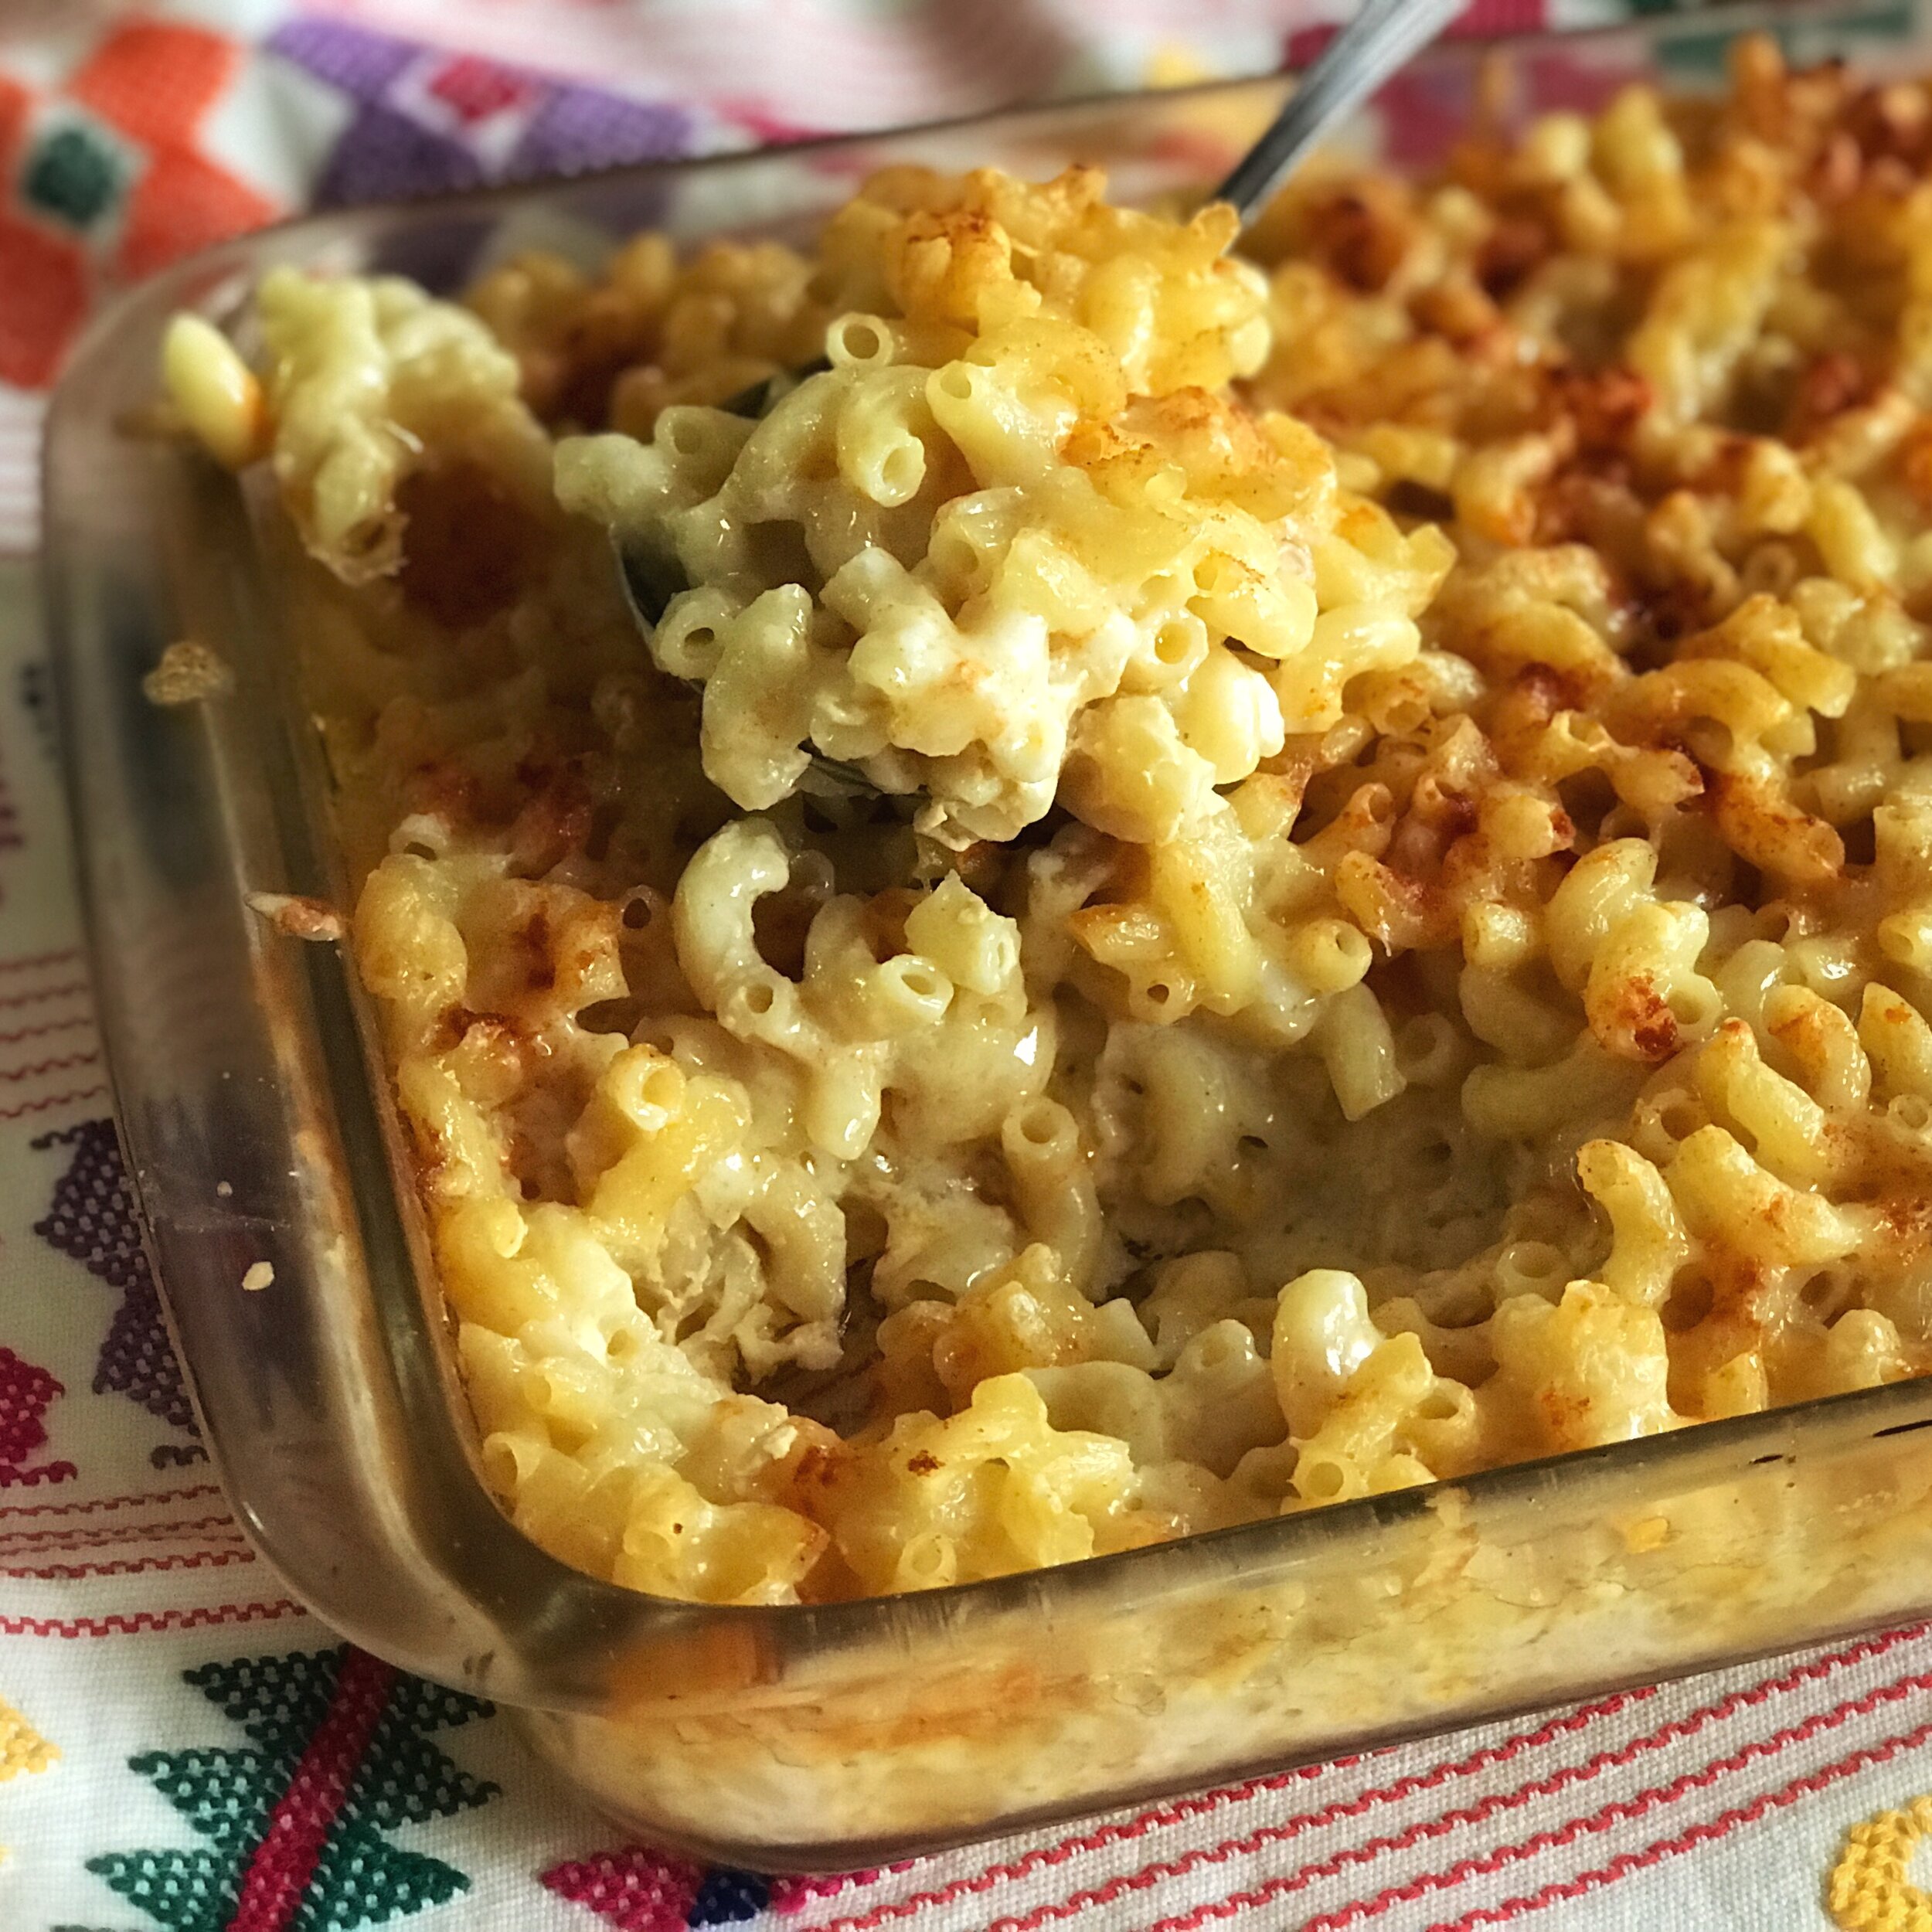 'Jubilee's' Baked Macaroni and Cheese (Vegetarian)